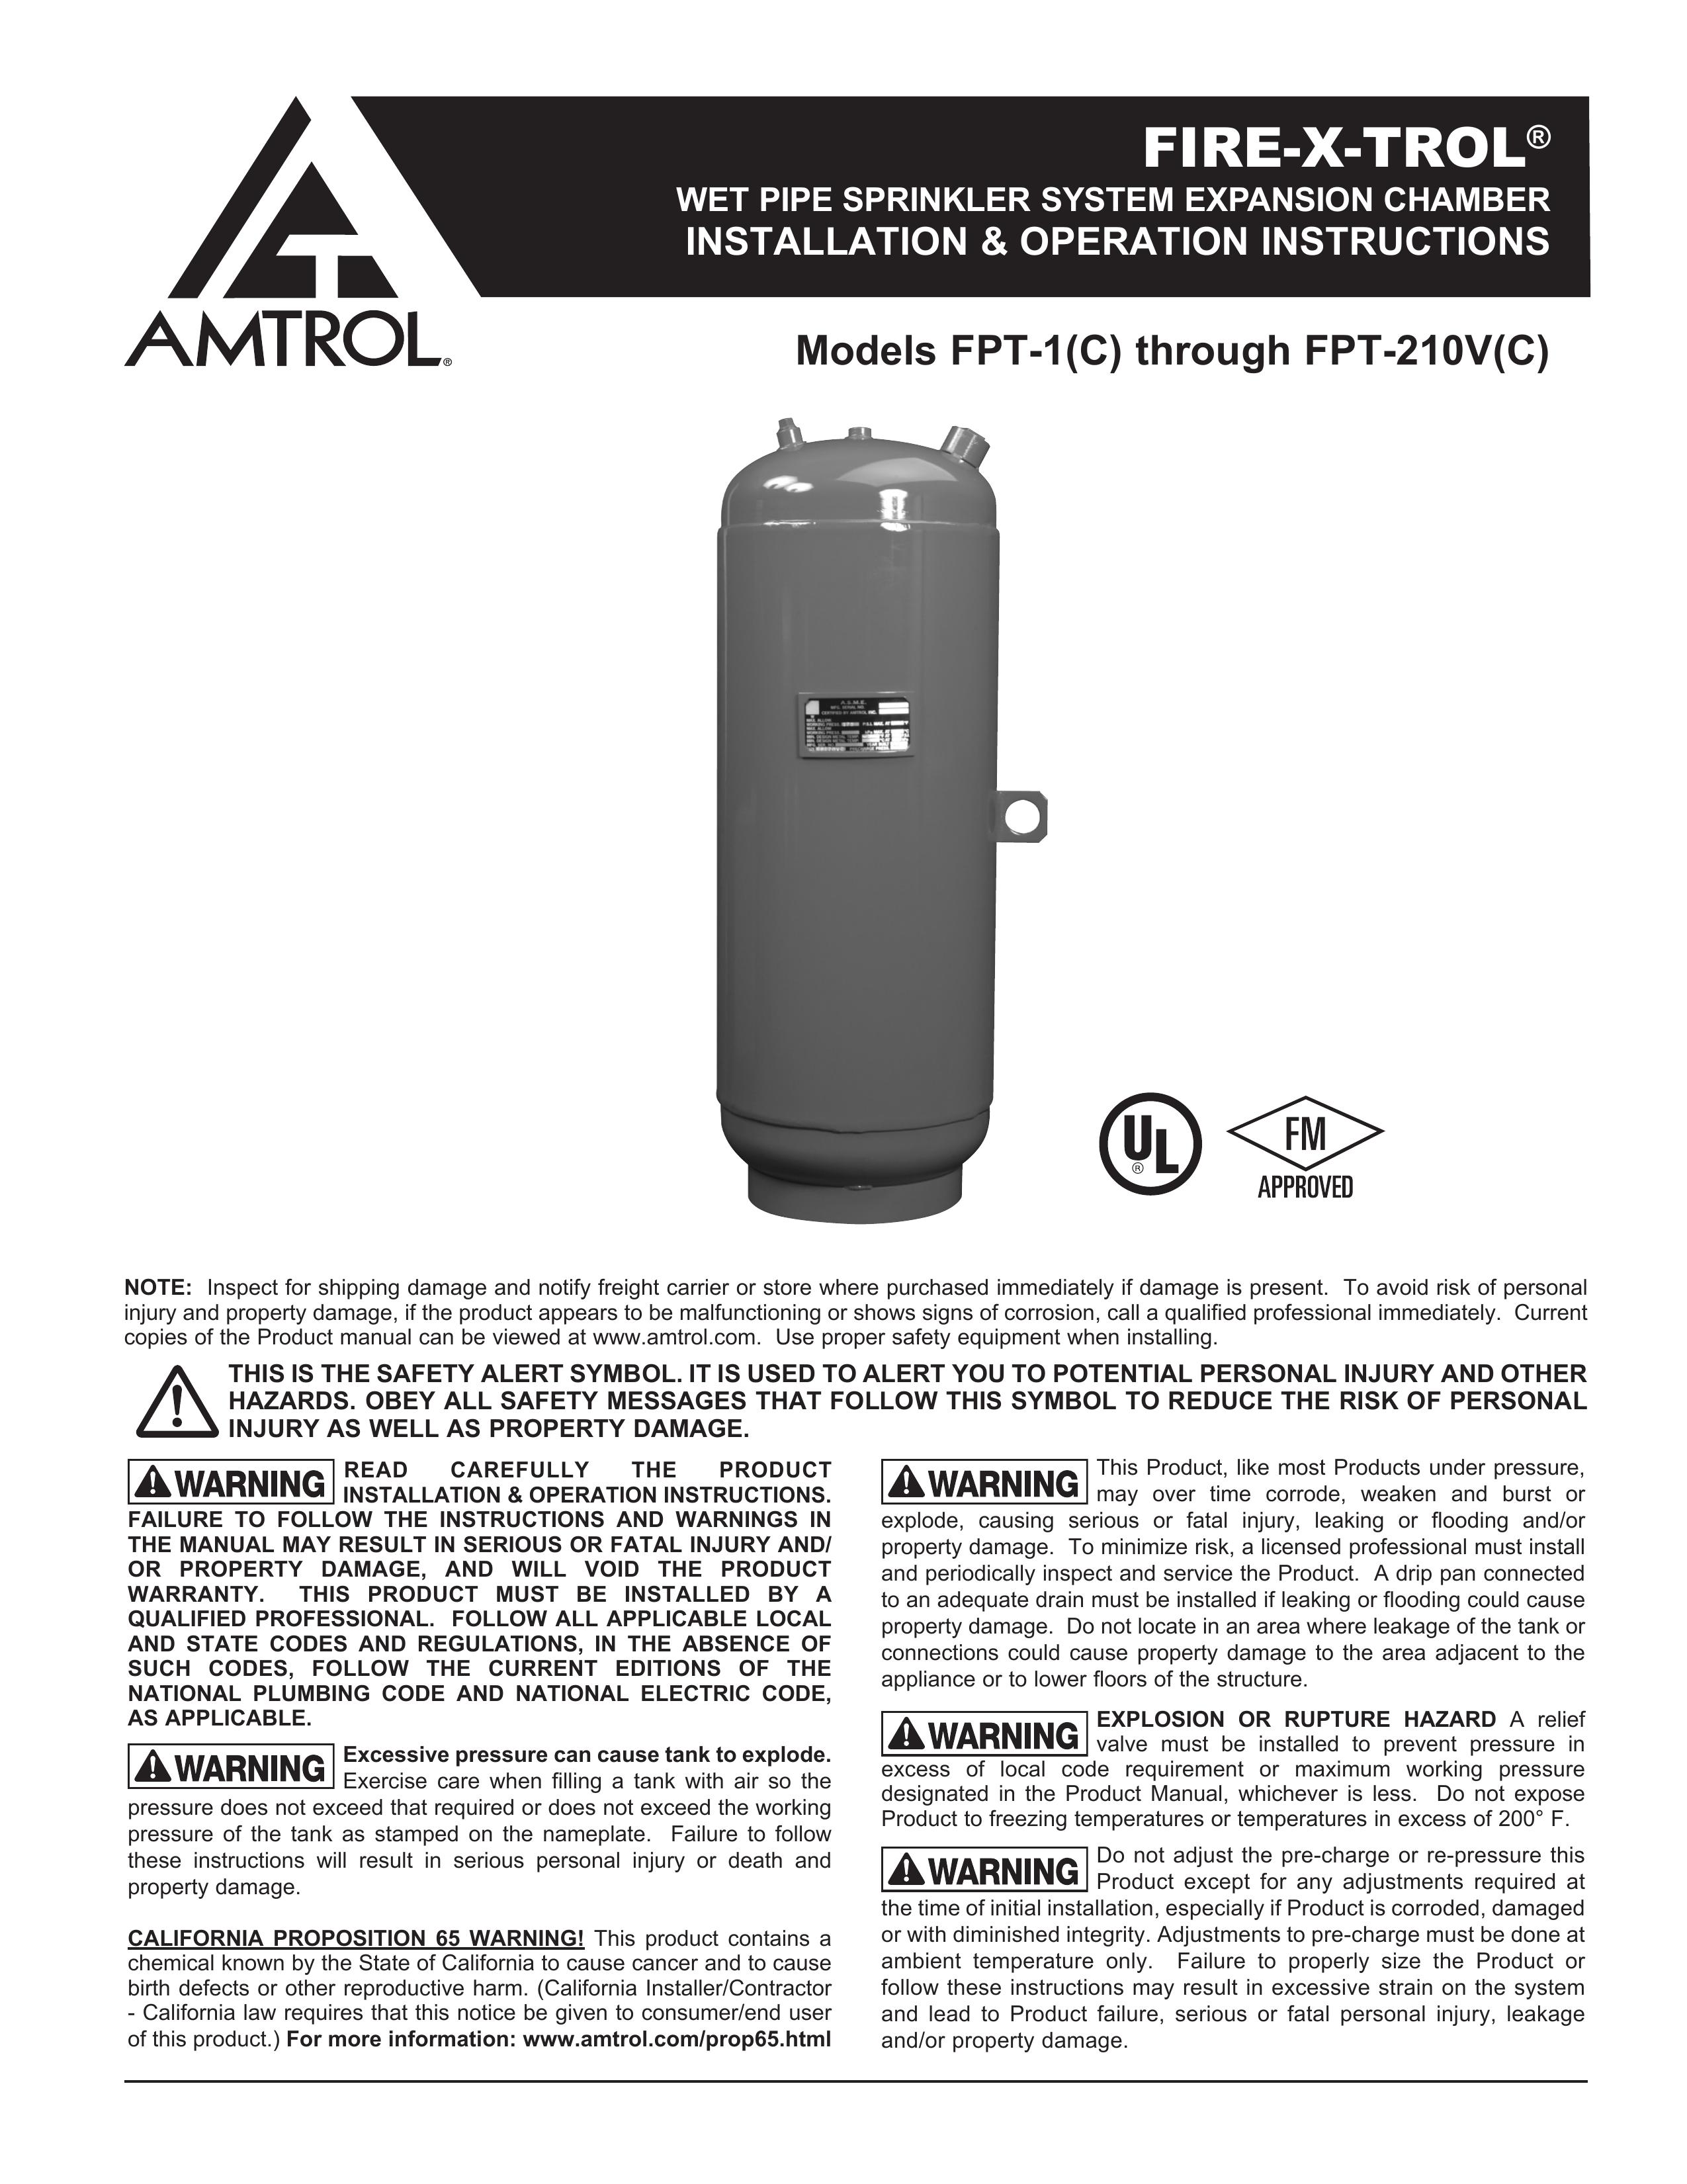 Amtrol fpt-1 Sprinkler User Manual